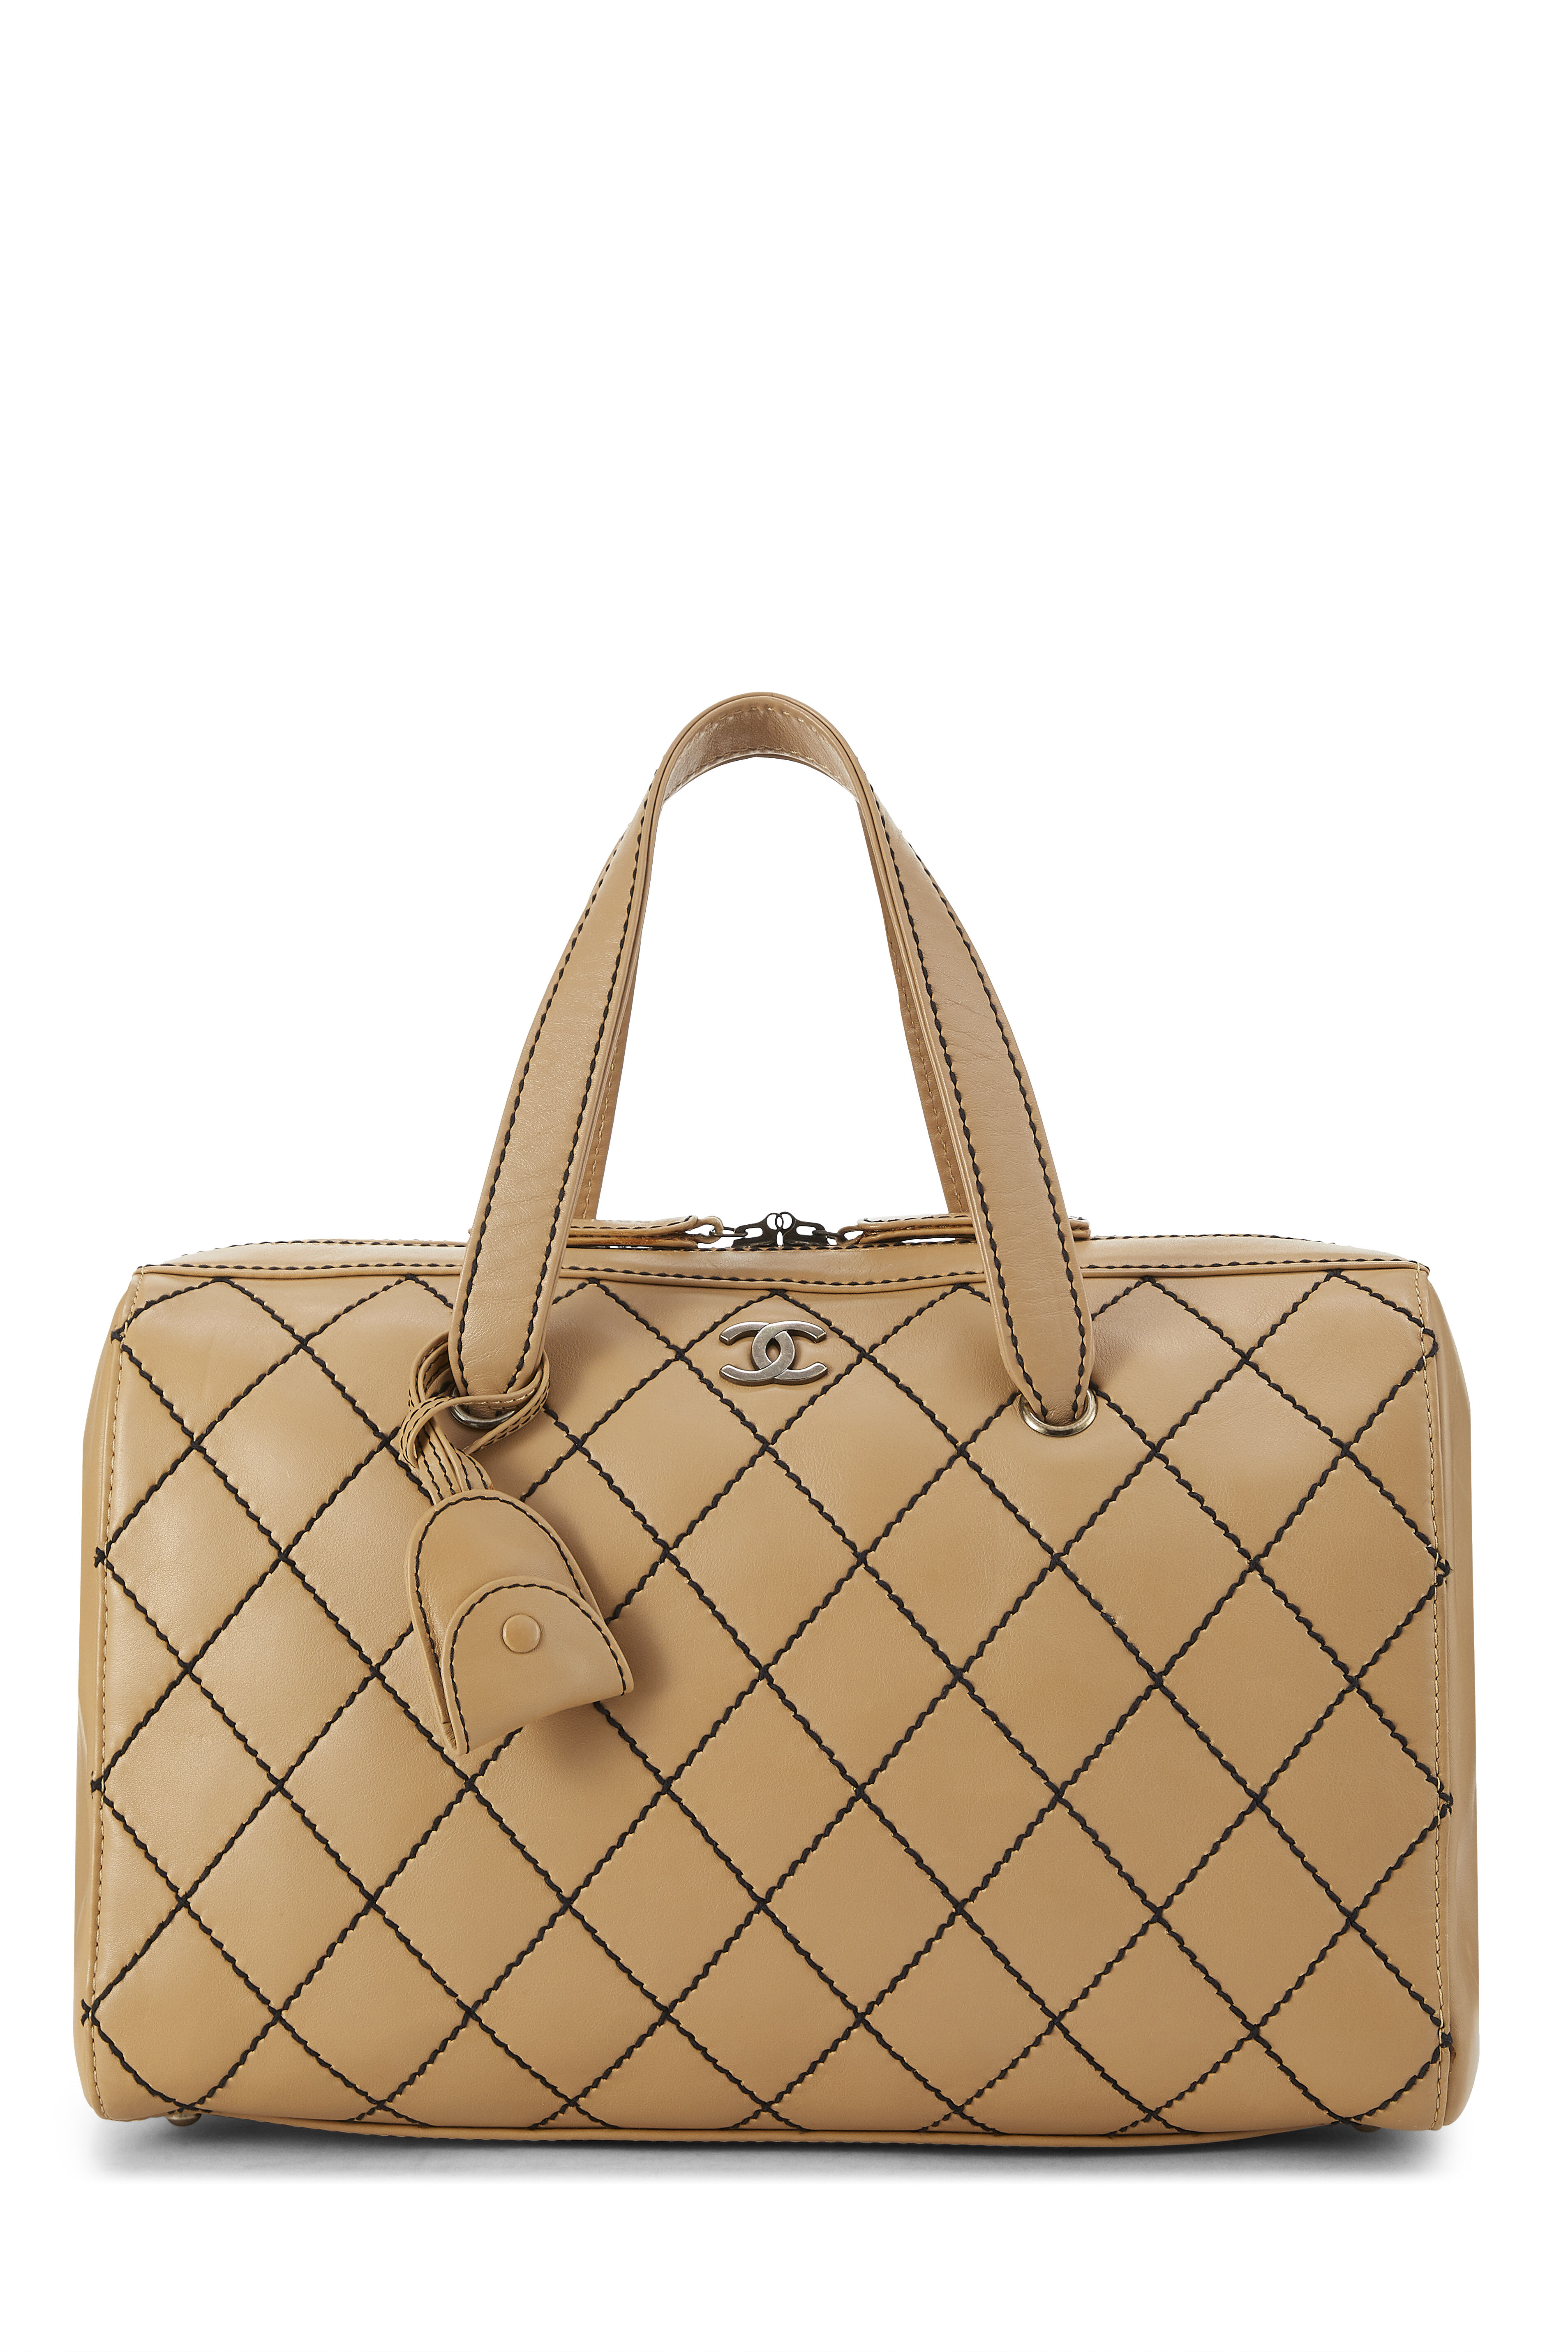 Chanel - Beige Leather Wild Stitch Boston Bag